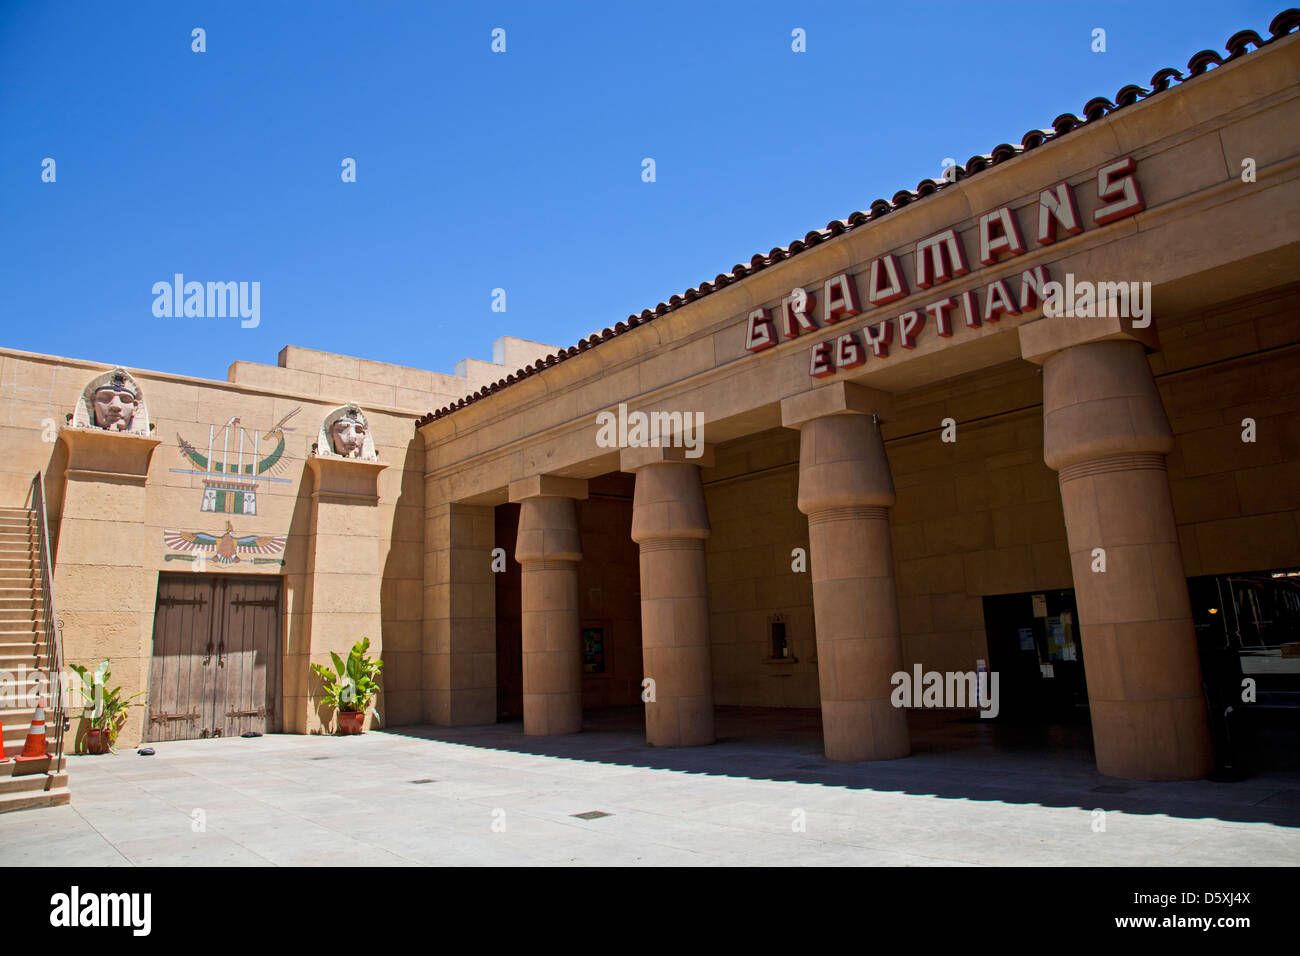 Graumans Egyptian Theatre, Hollywood Blvd, Los Angeles, Kalifornien, USA Stockfoto